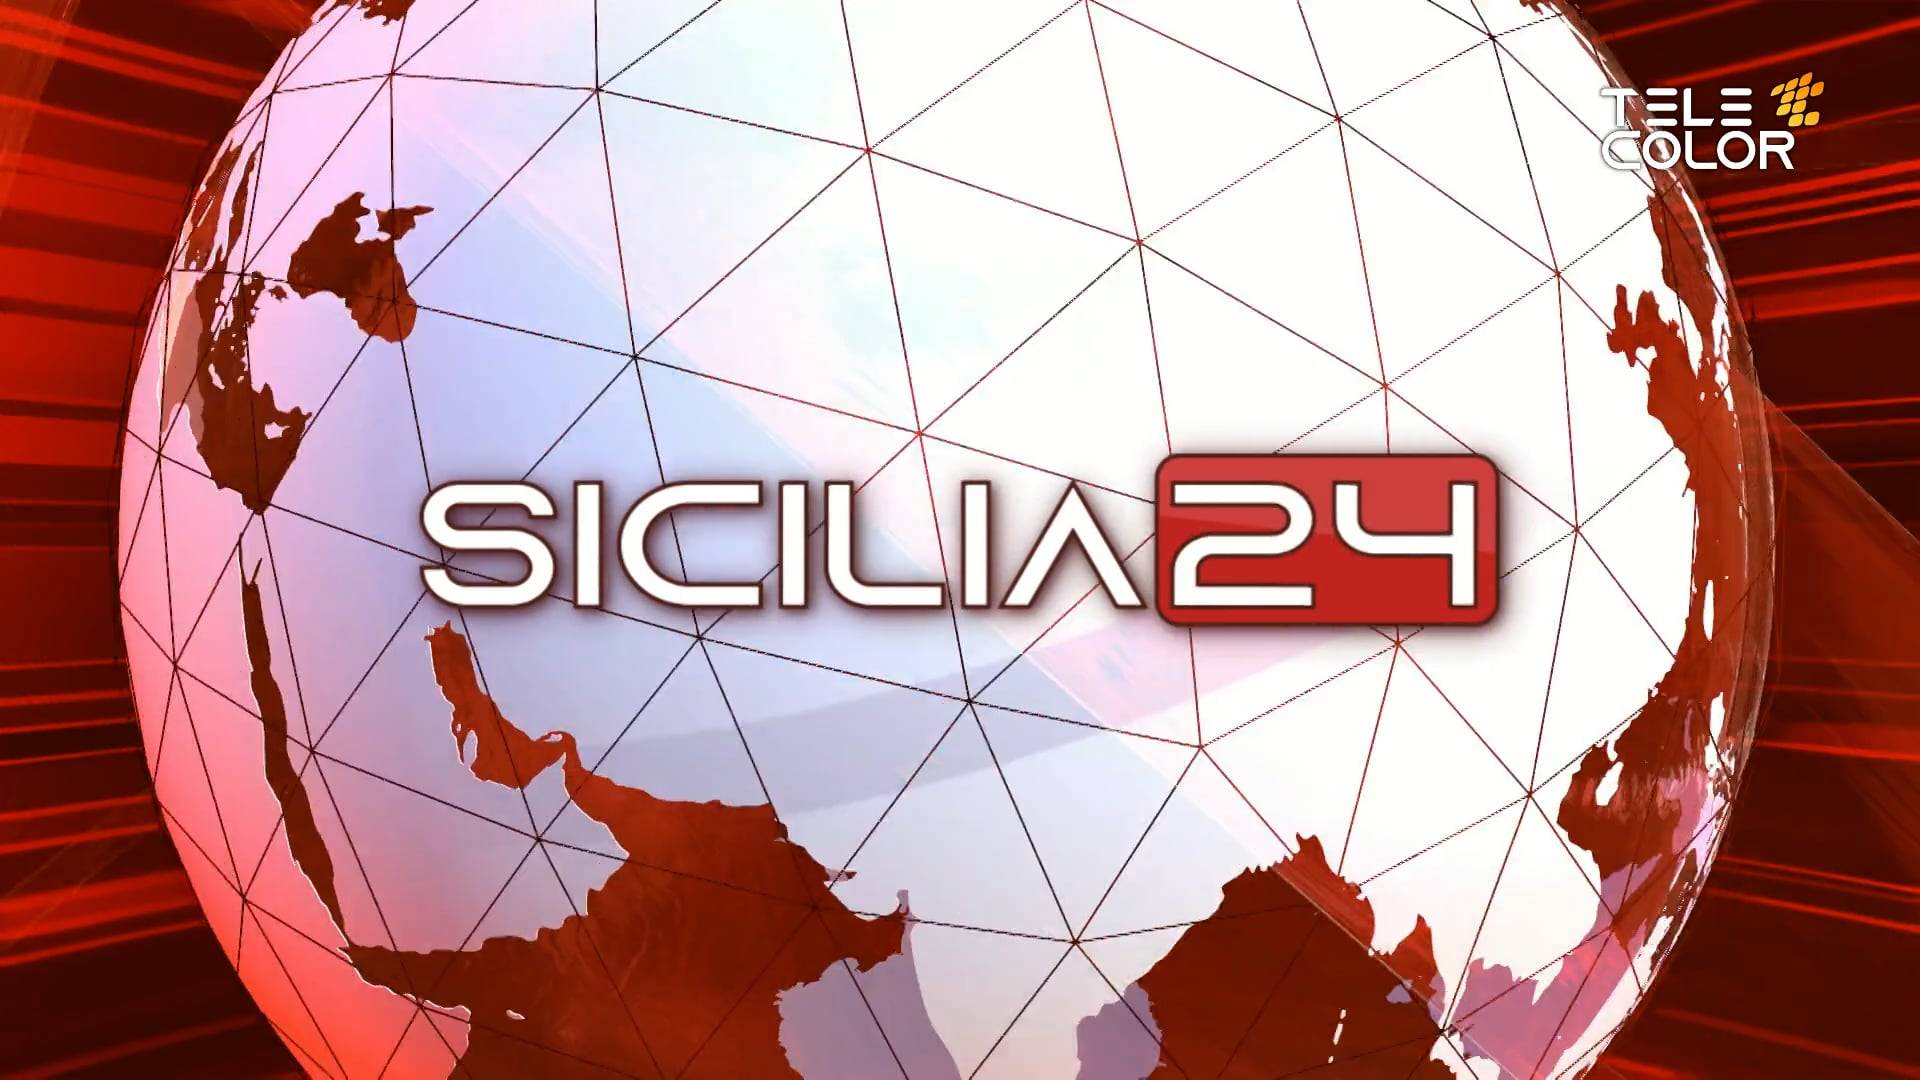 sicilia24-17-marzo-2023-ore-14-vimeo-thumbnail.jpg